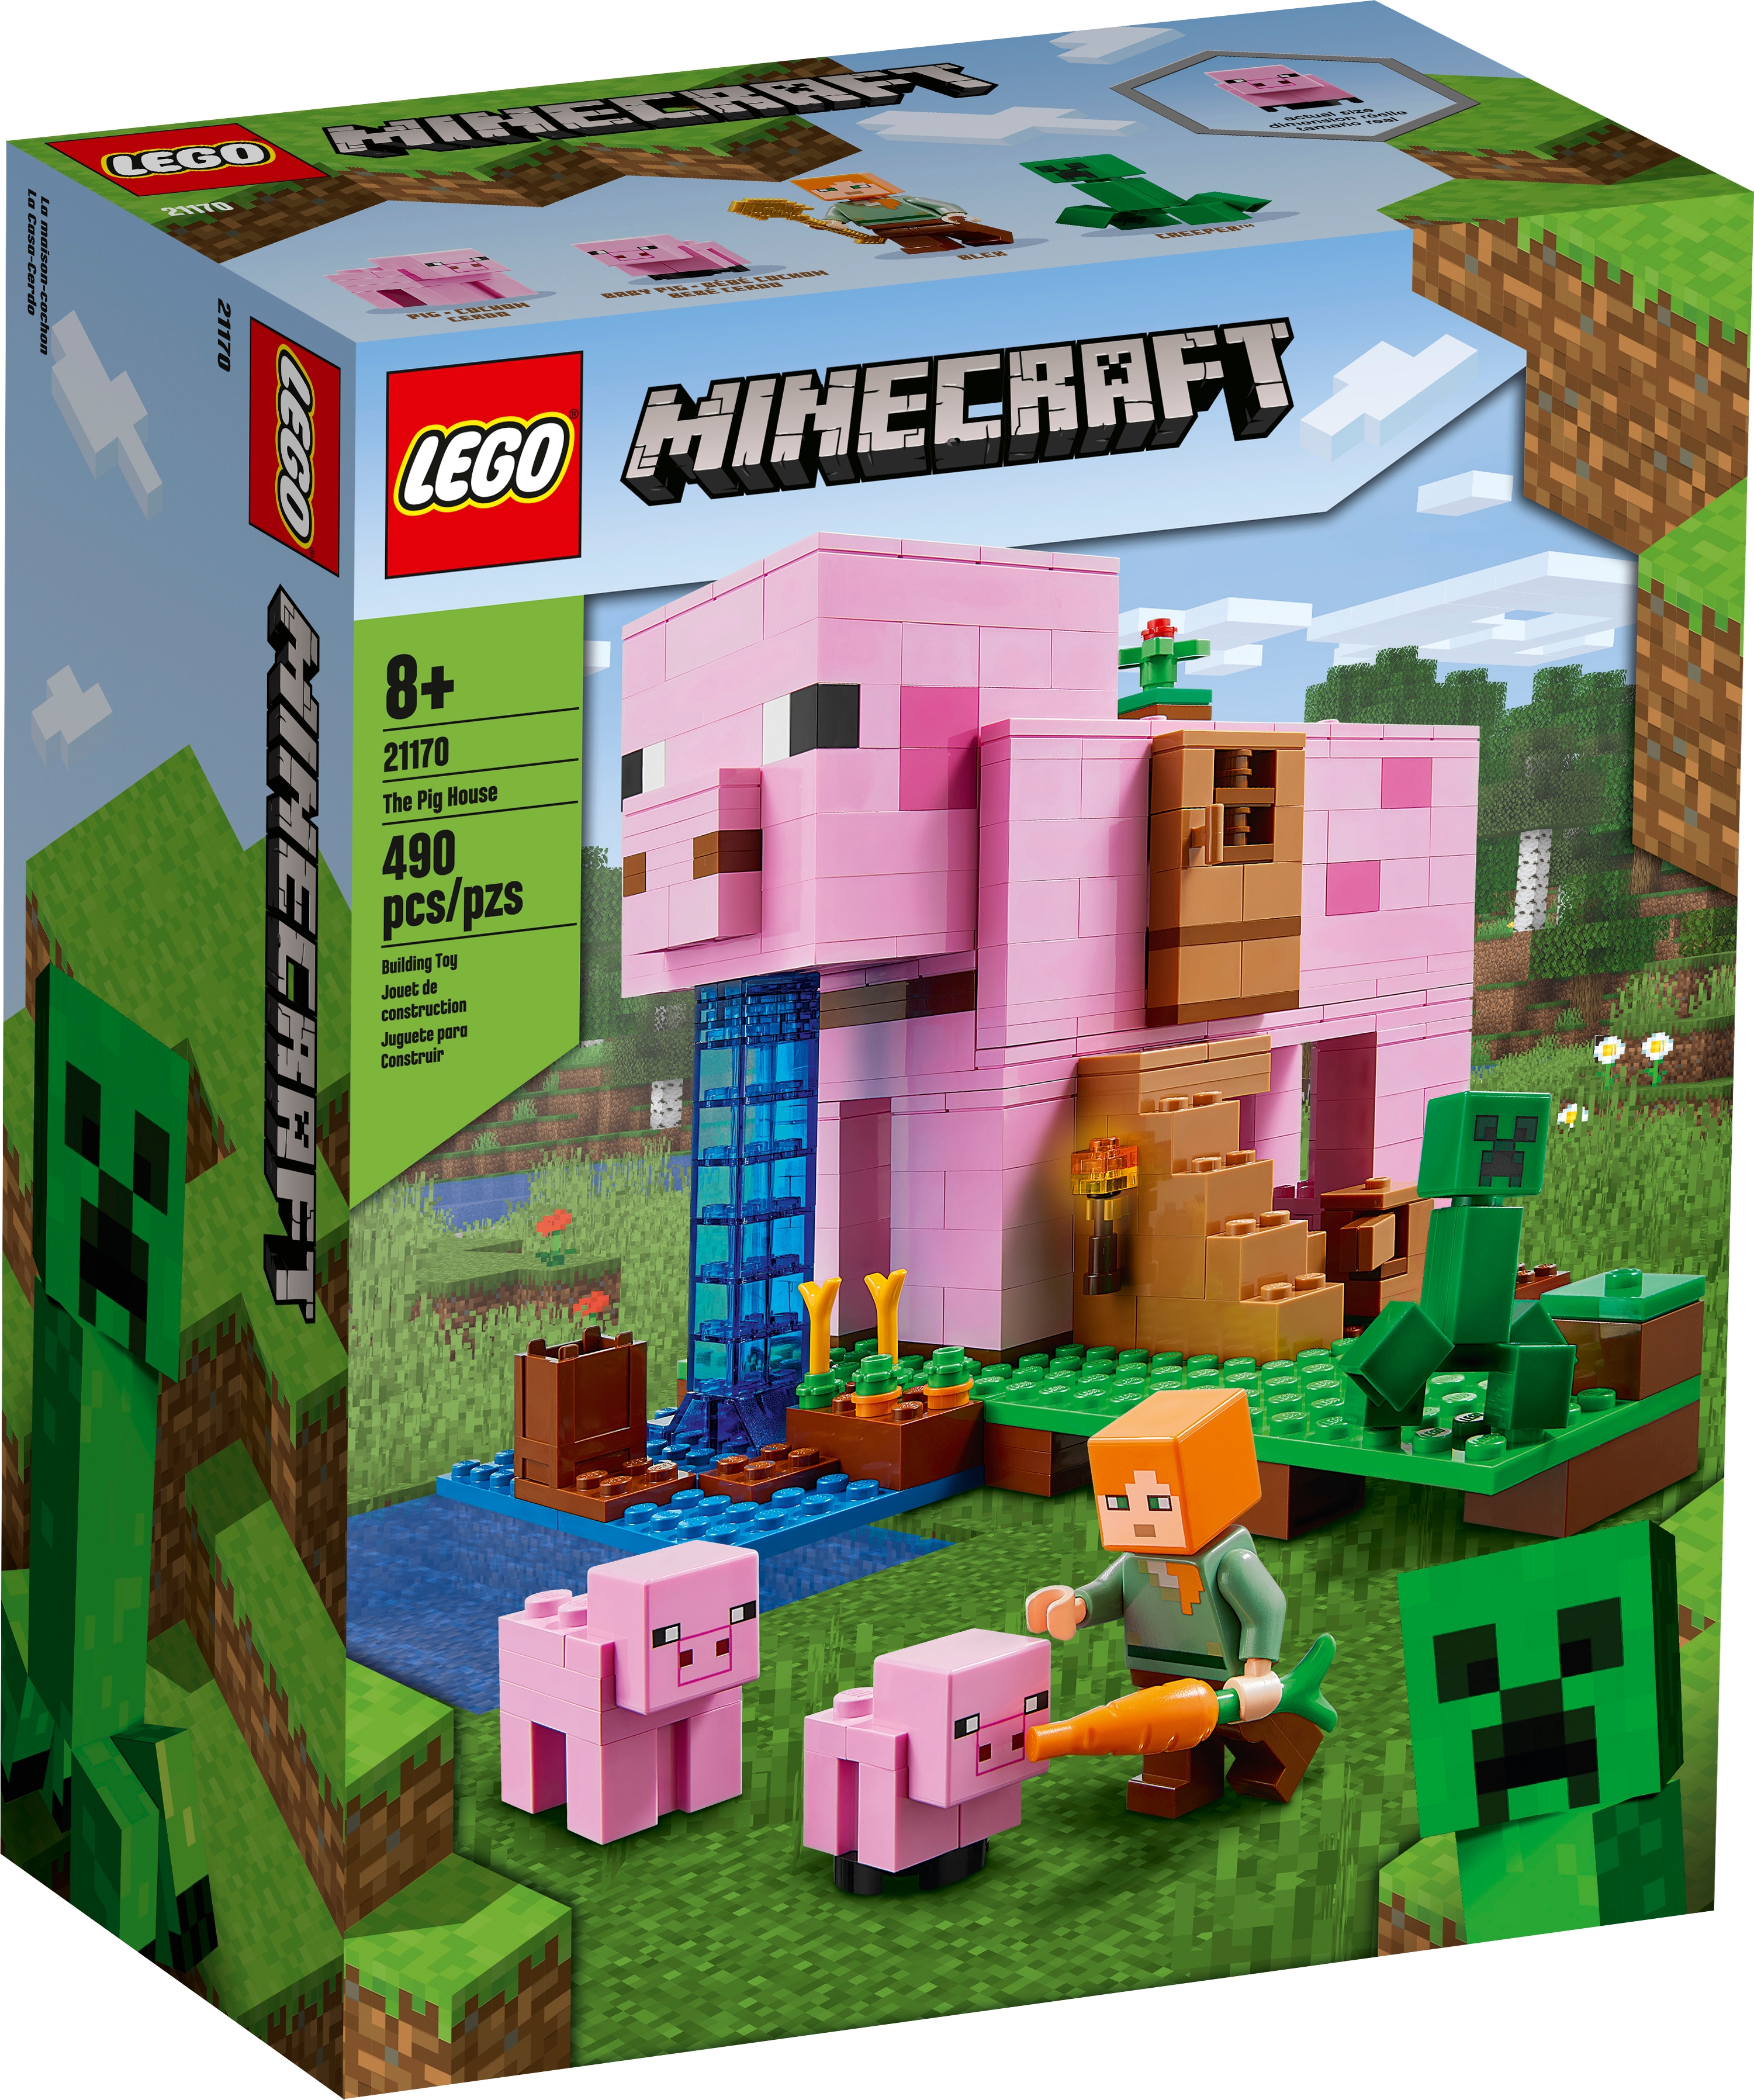 Lego 21170 Minecraft The Pig House Building Set 